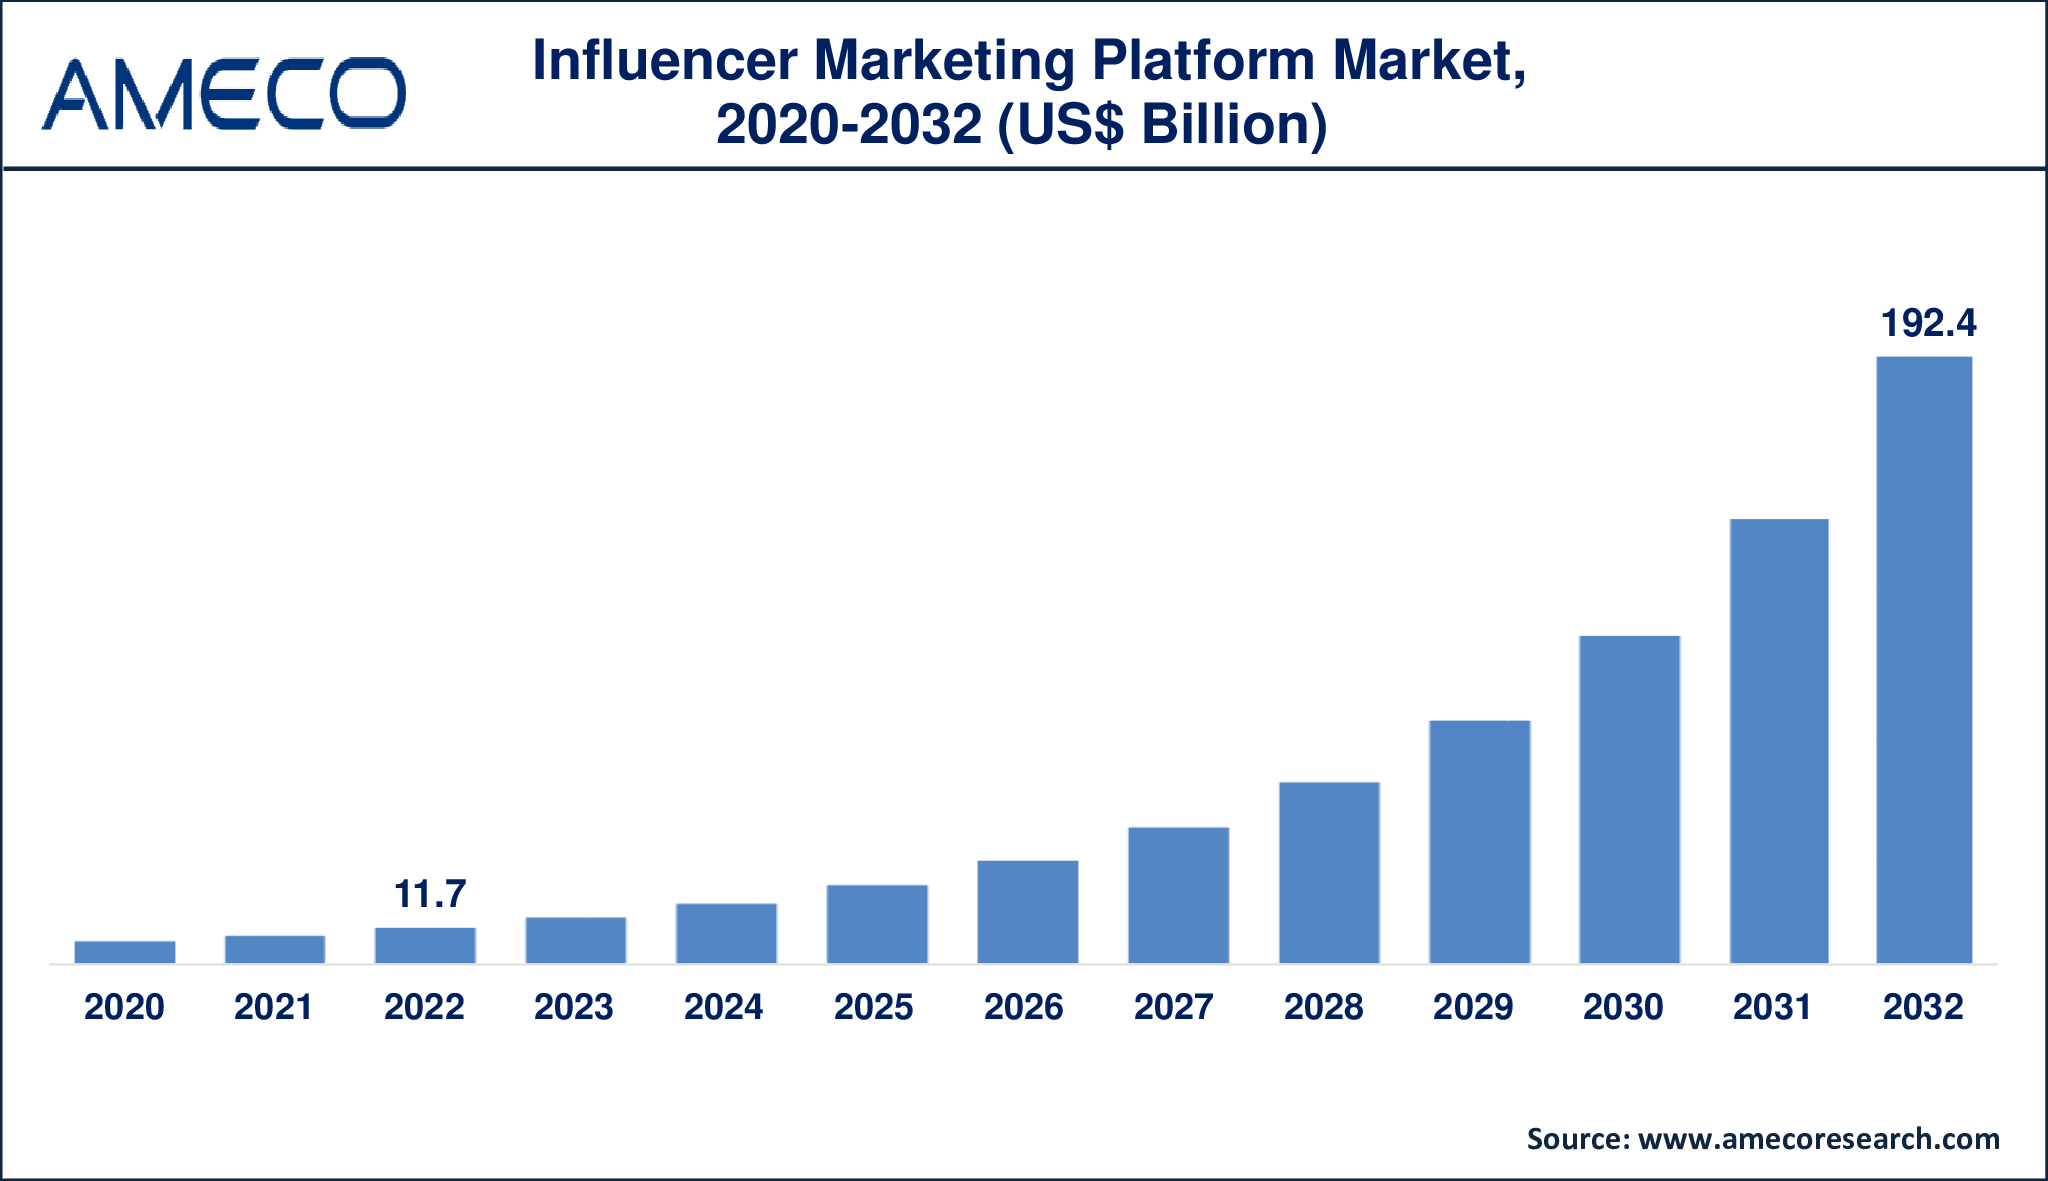 Influencer Marketing Platform Market Growth